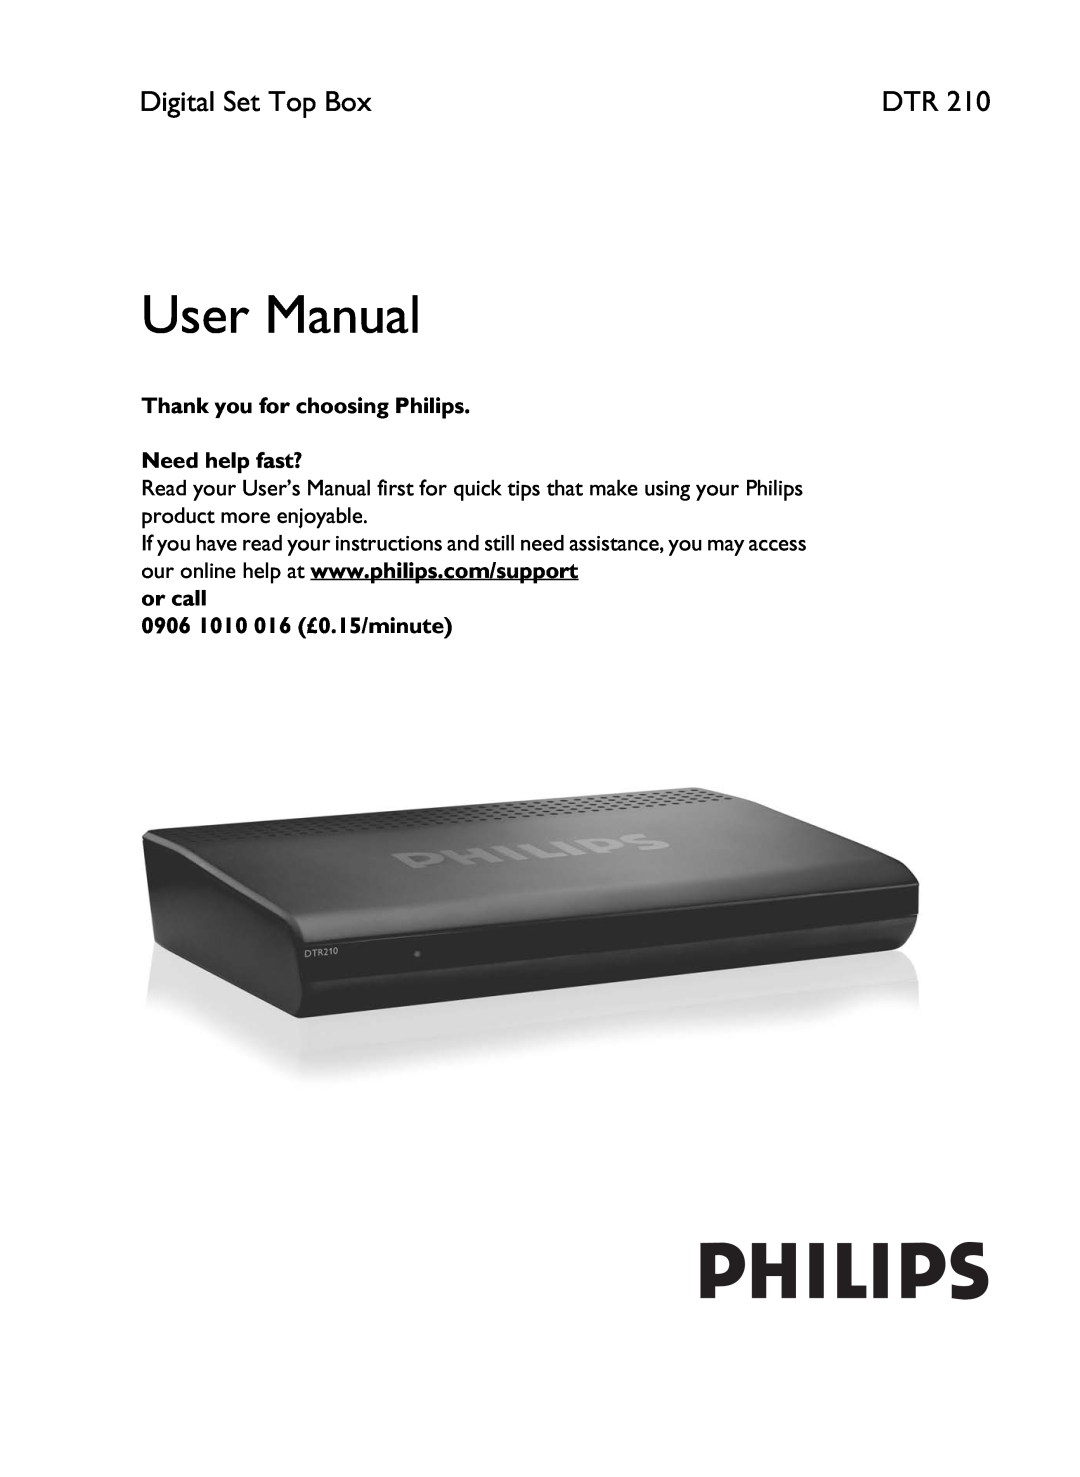 Philips DTR210 manual Philips Digital Terrestrial Receiver, Better, More, Easier, Digital TV made simple 